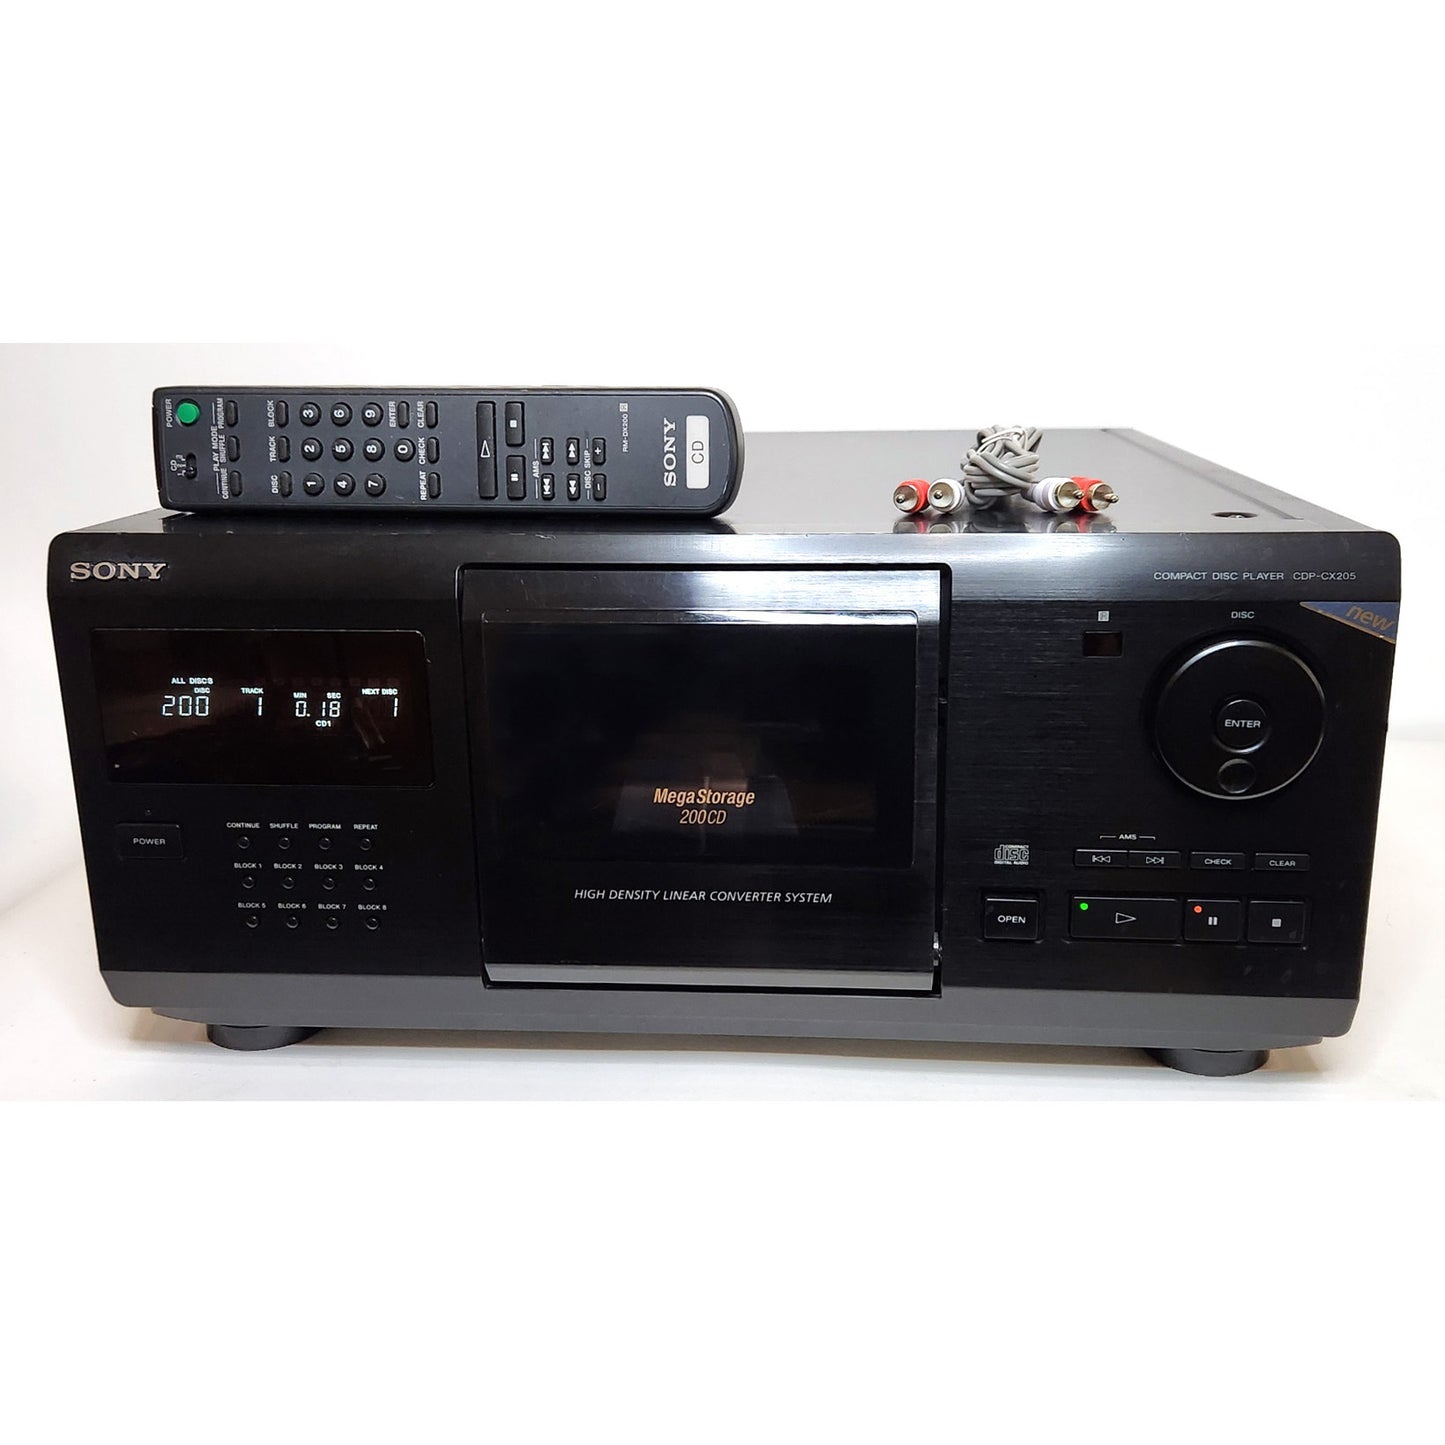 Sony CDP-CX205 MegaStorage 200 CD Changer